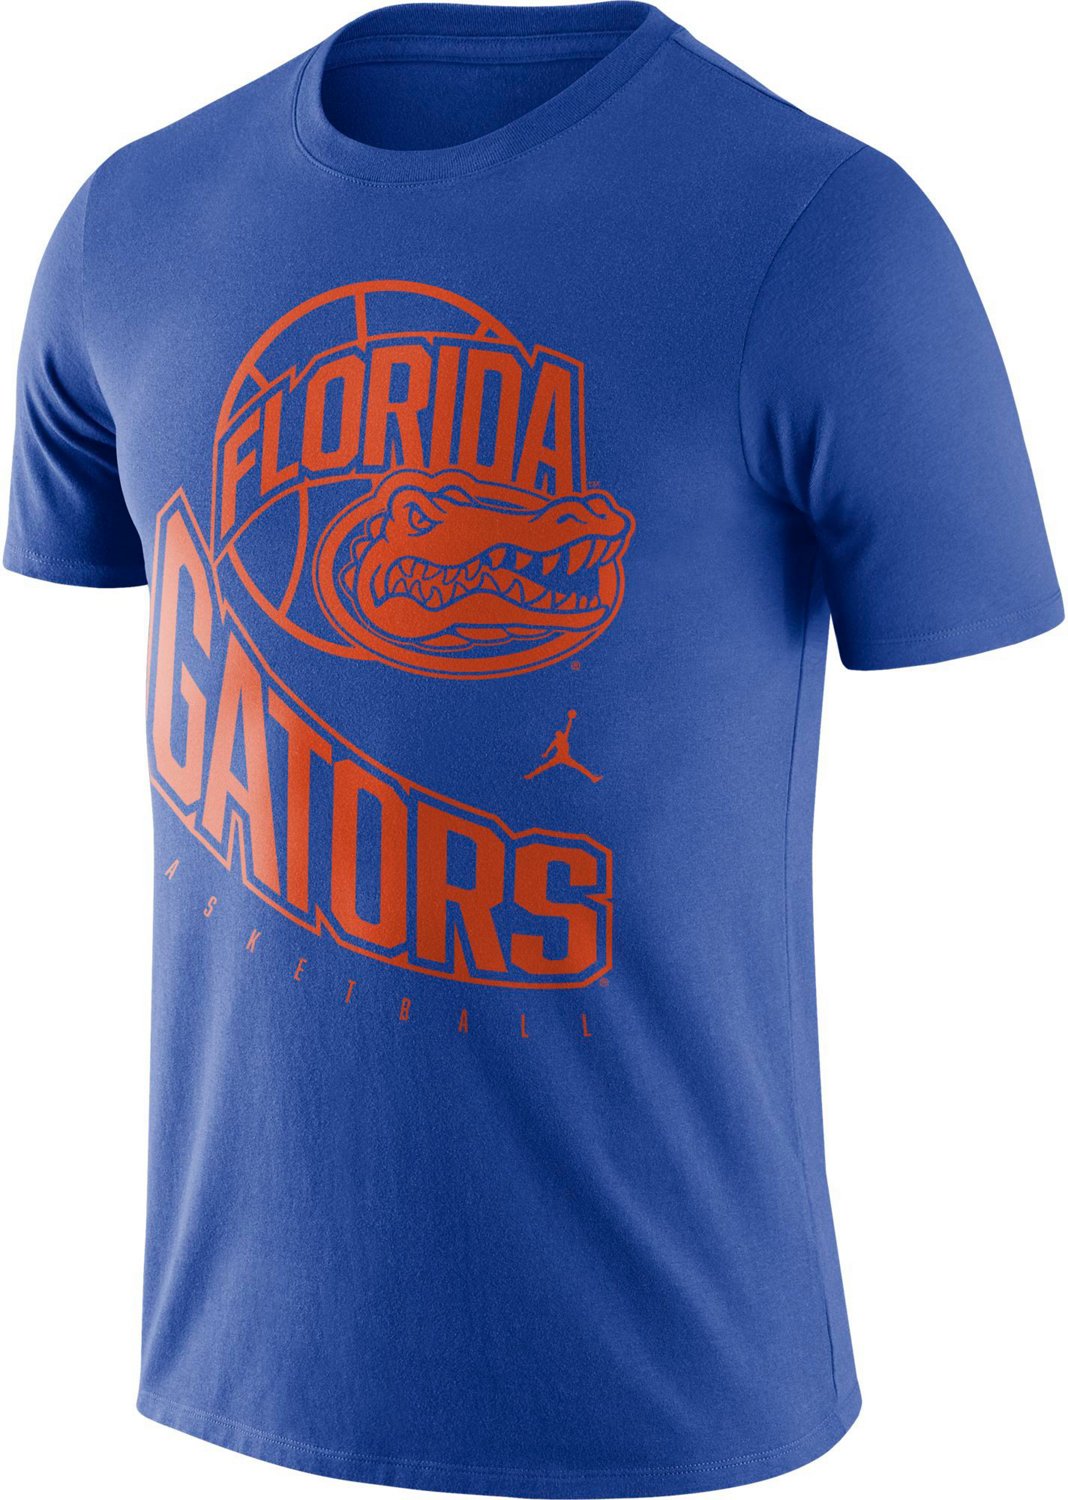 Nike Men's University of Florida Retro Baseball Short Sleeve T-shirt ...